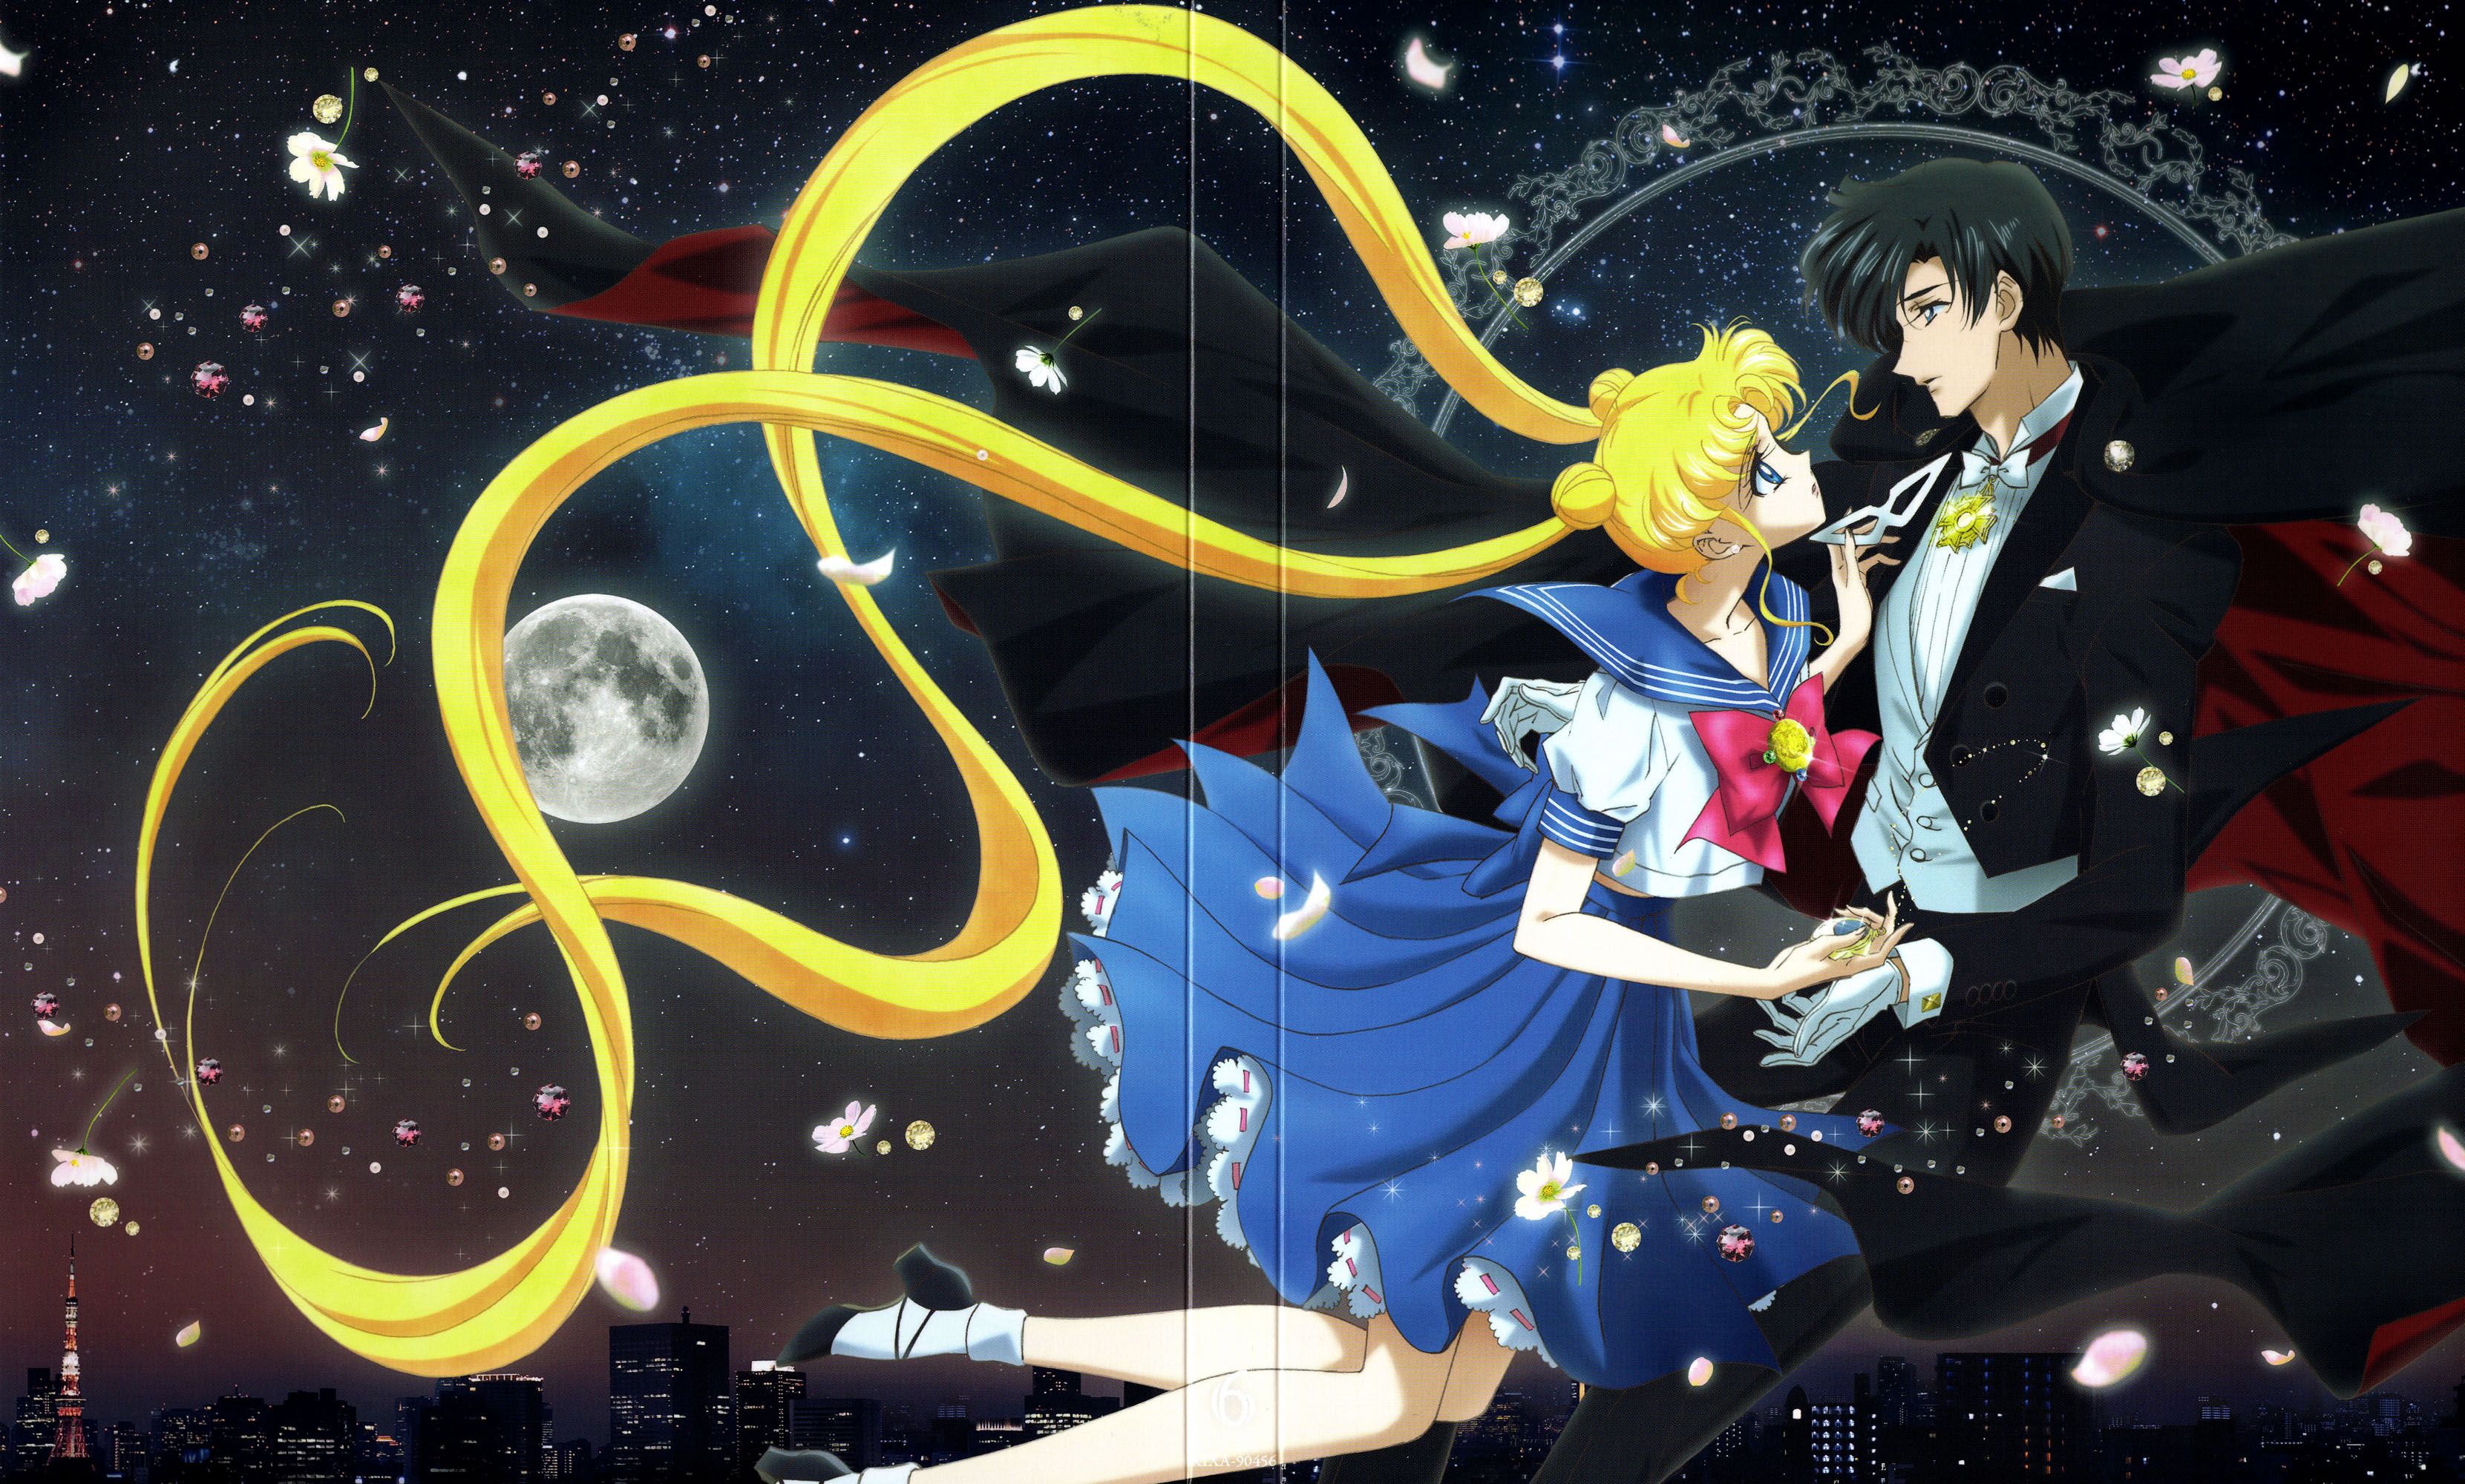 Fondos de pantalla: Sailor Moon 3321x2000 - Dollmaker - 1156909 - HD